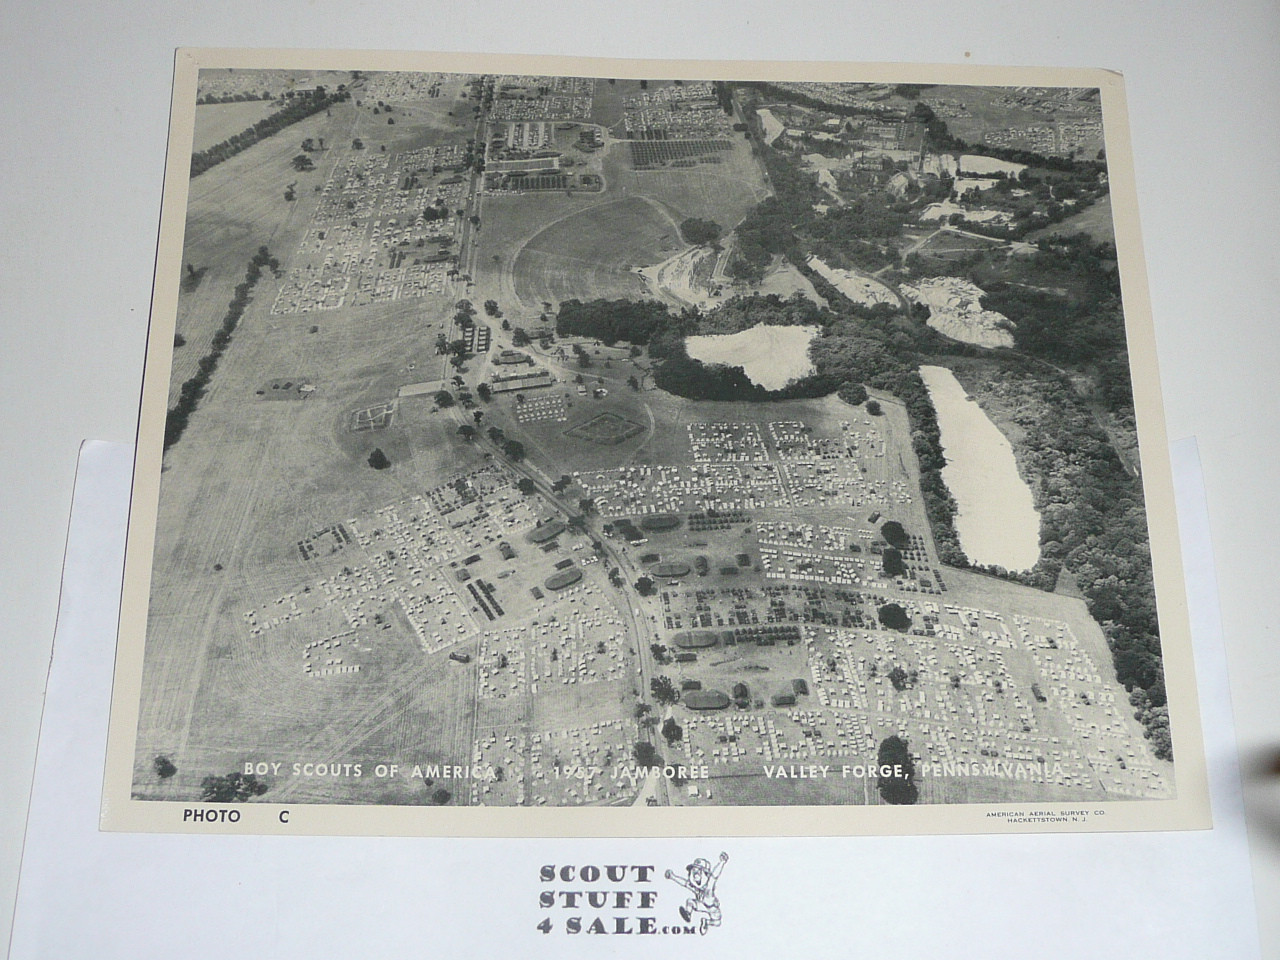 1957 National Jamboree Ariel Photograph of the Jamboree Site